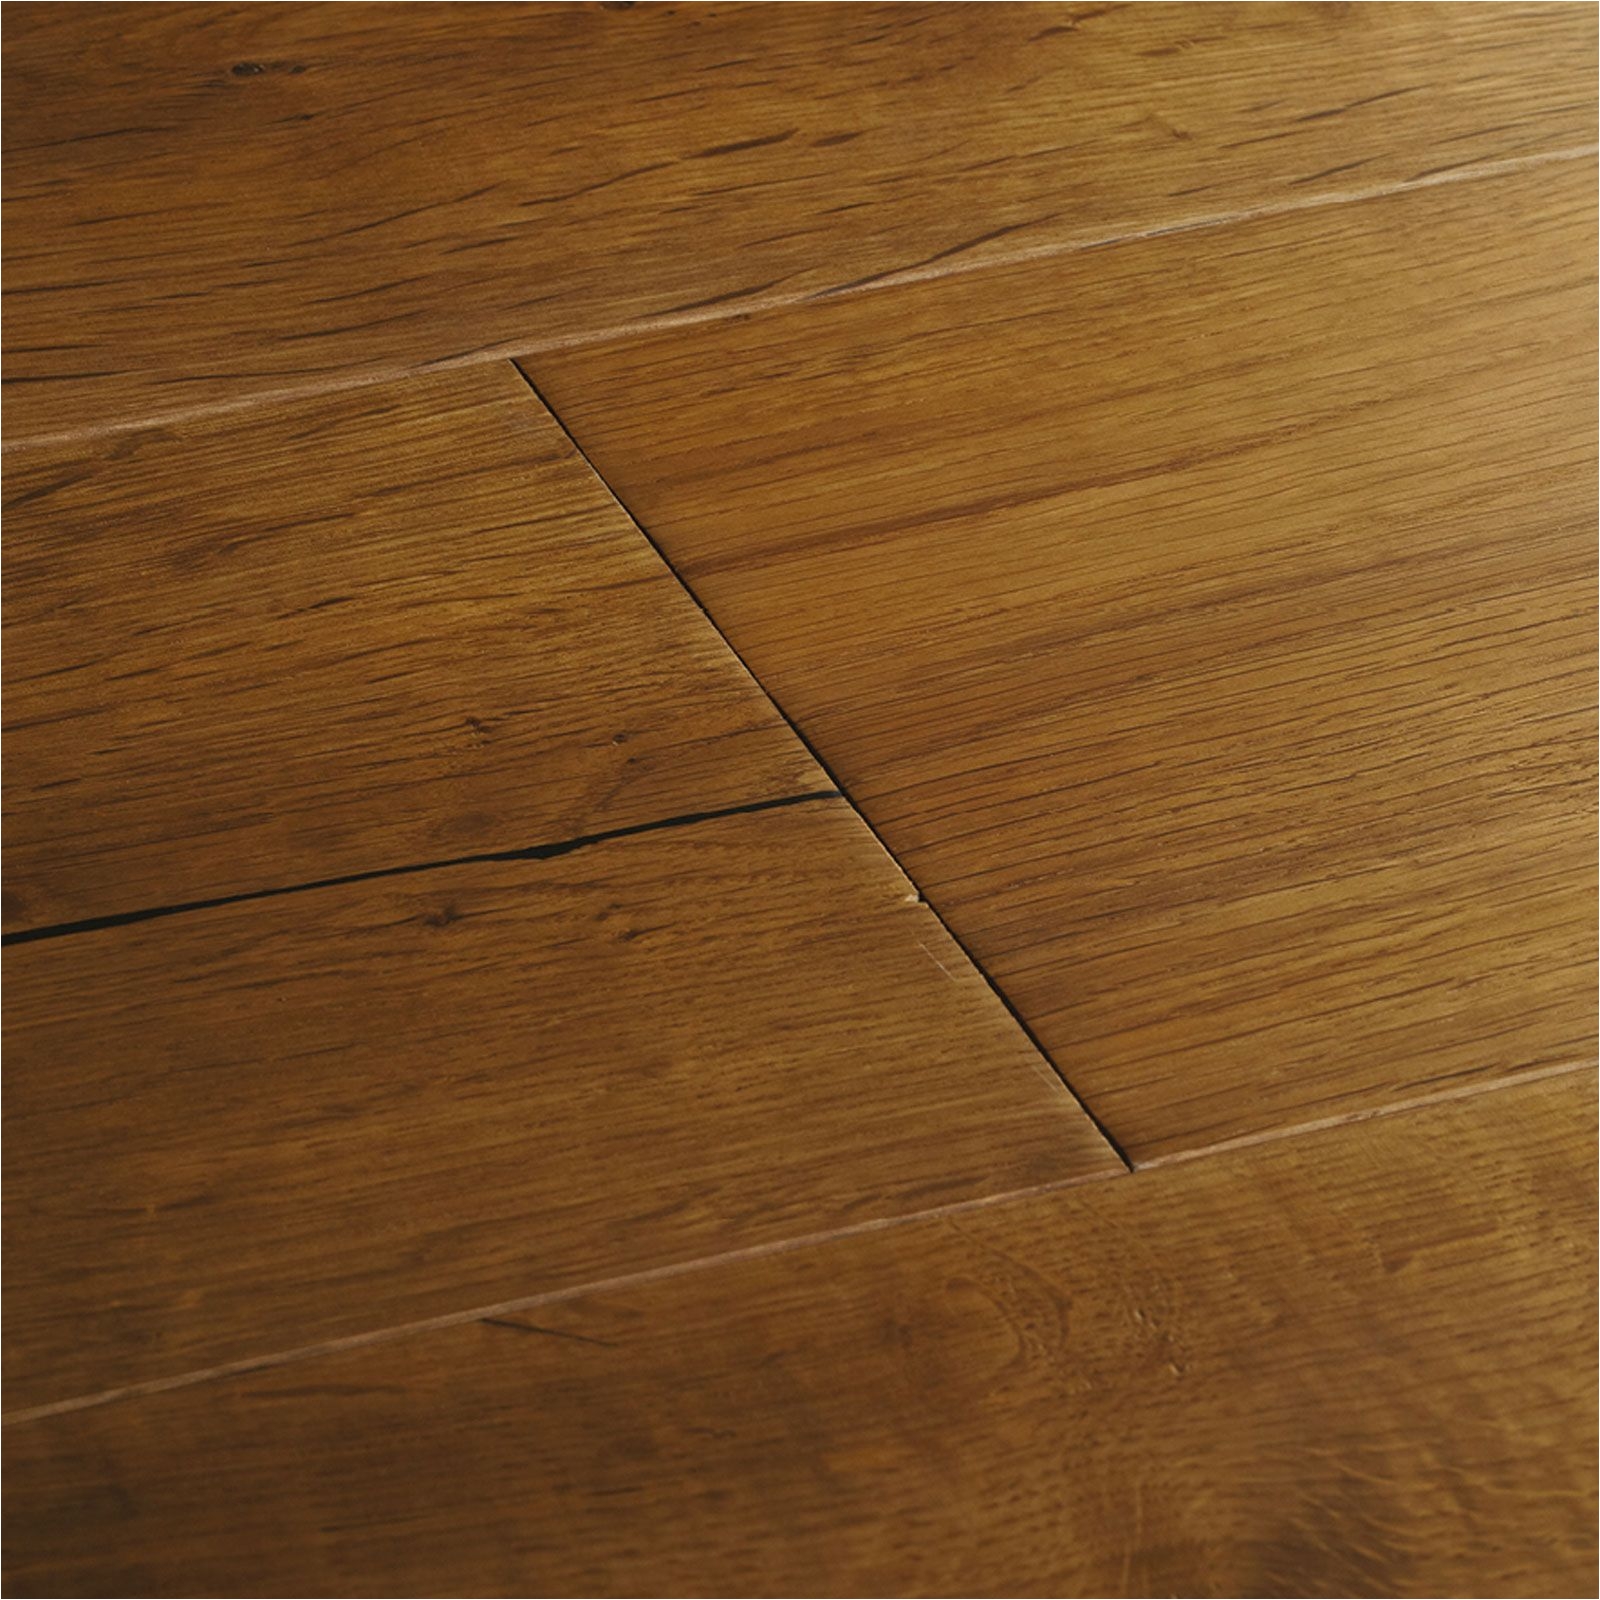 berkeley smoked oak a 82 95 pm2 berkeley smoked oak engineered wood flooring